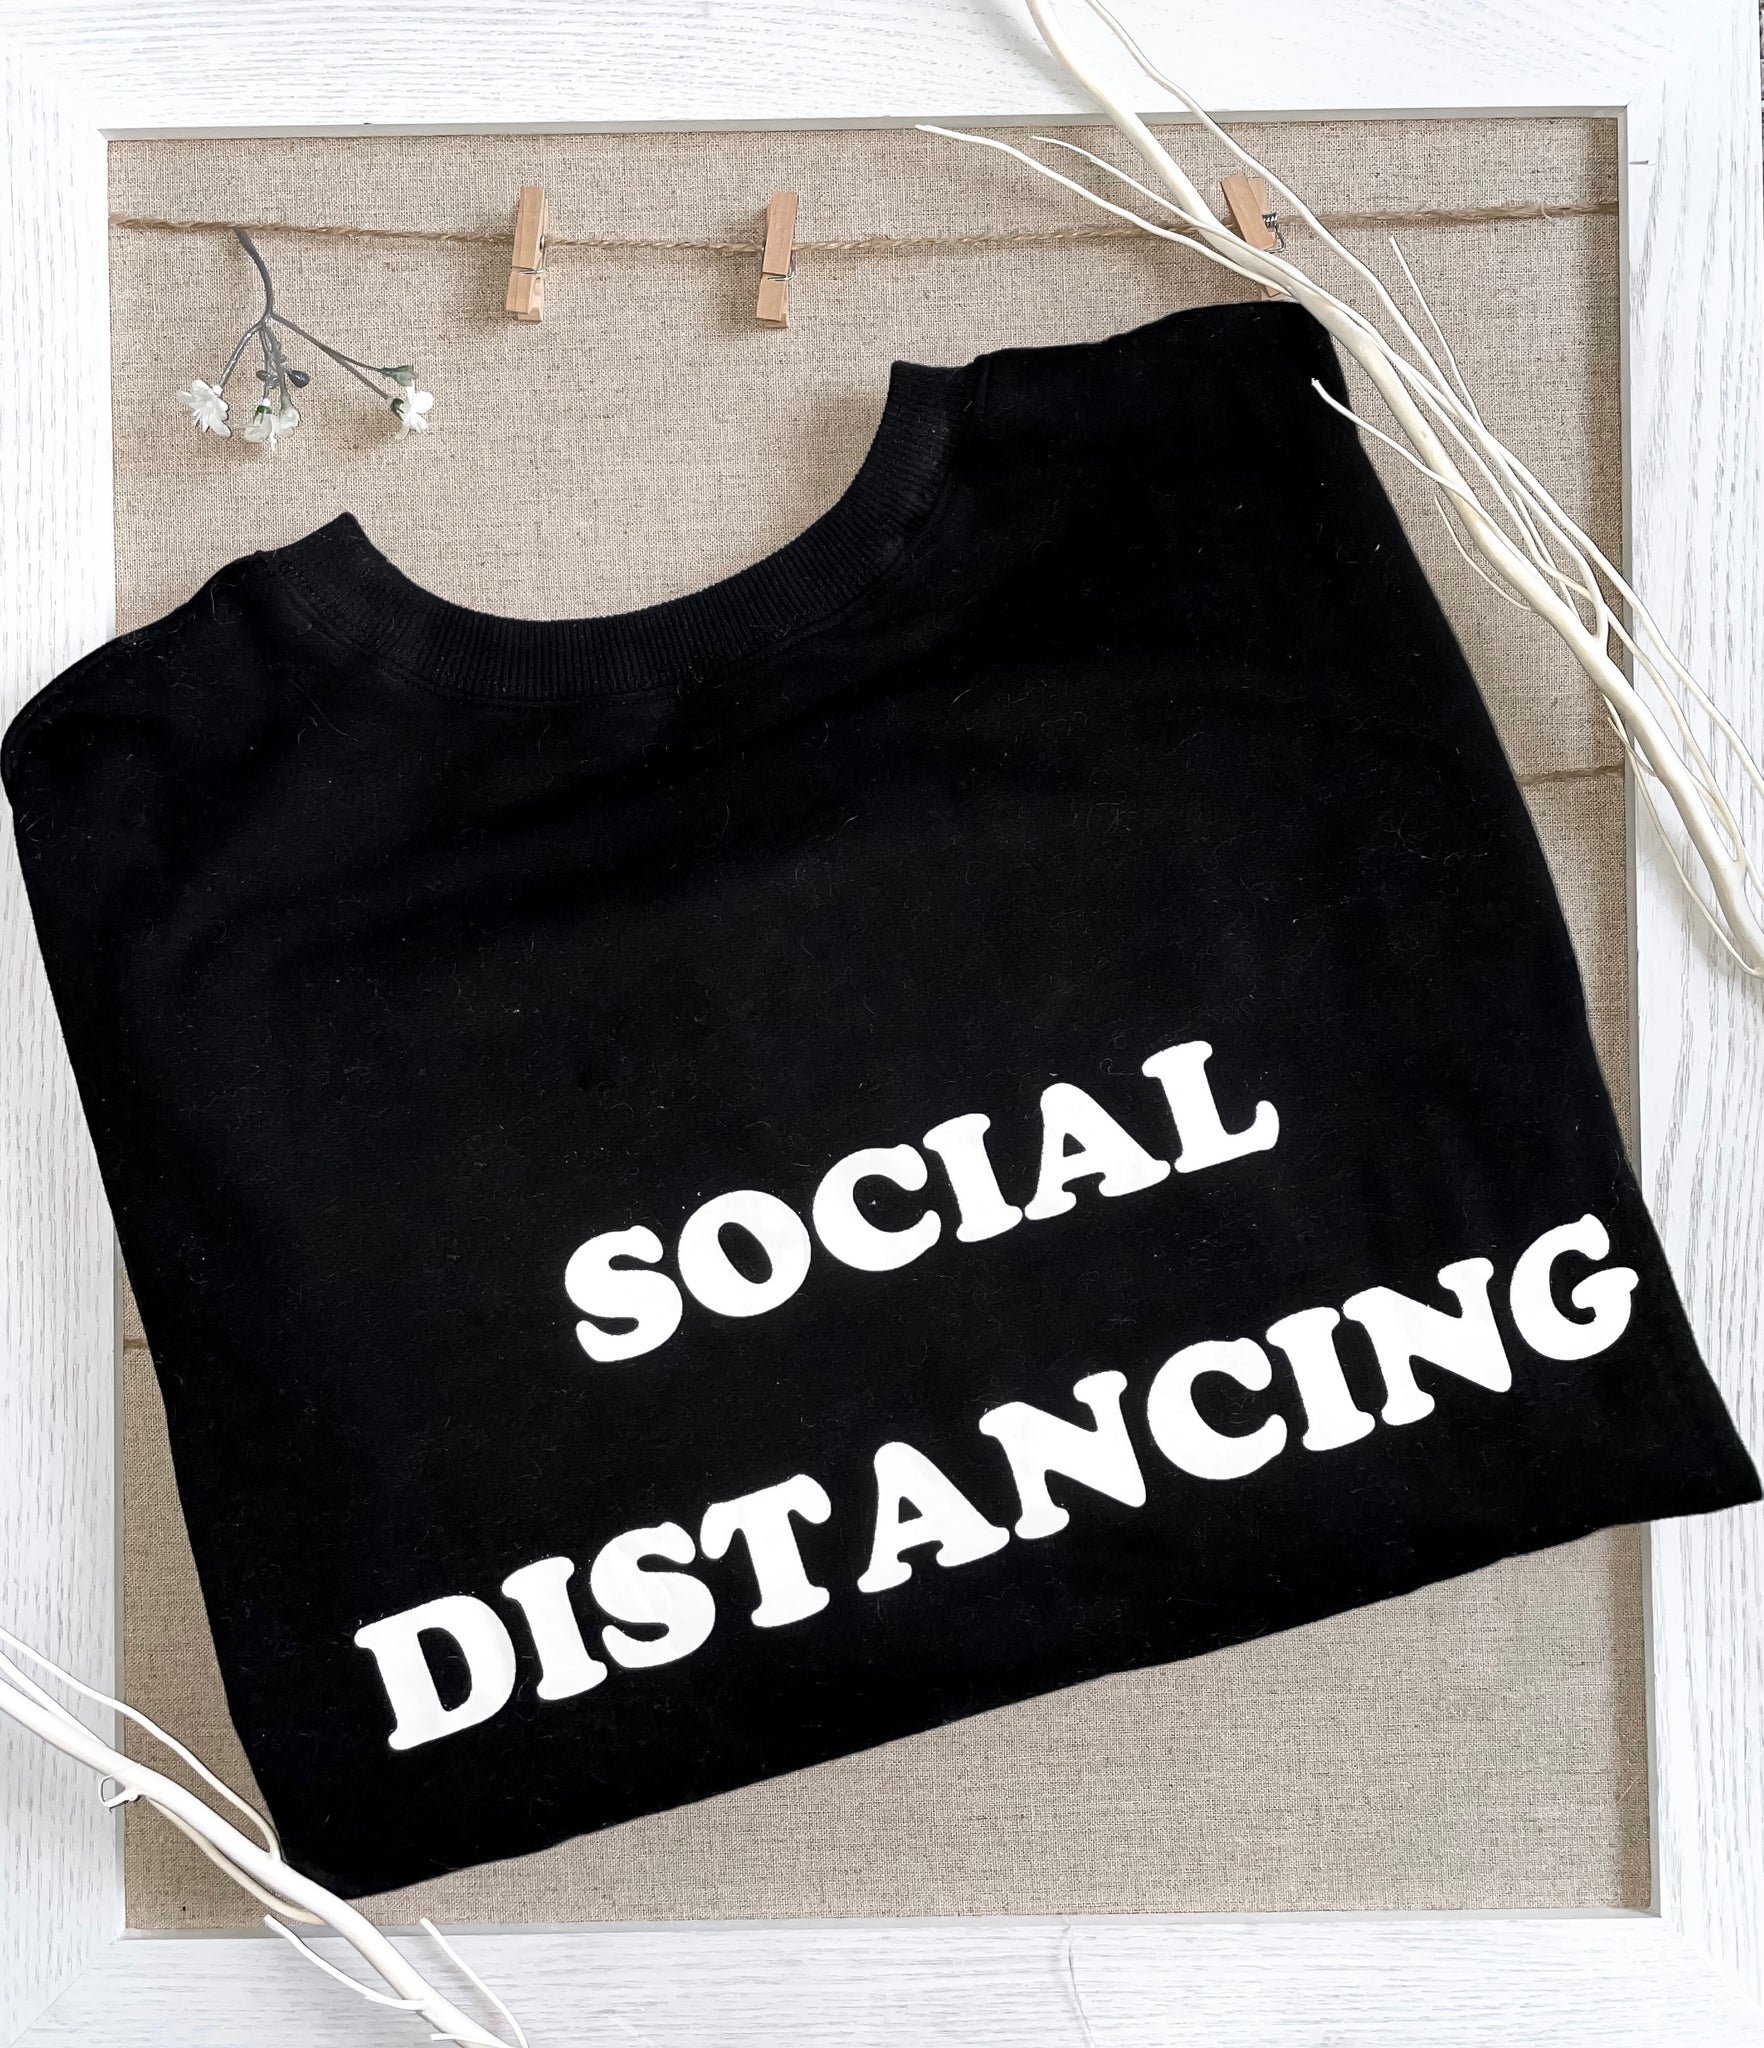 Social Distancing Sweatshirt